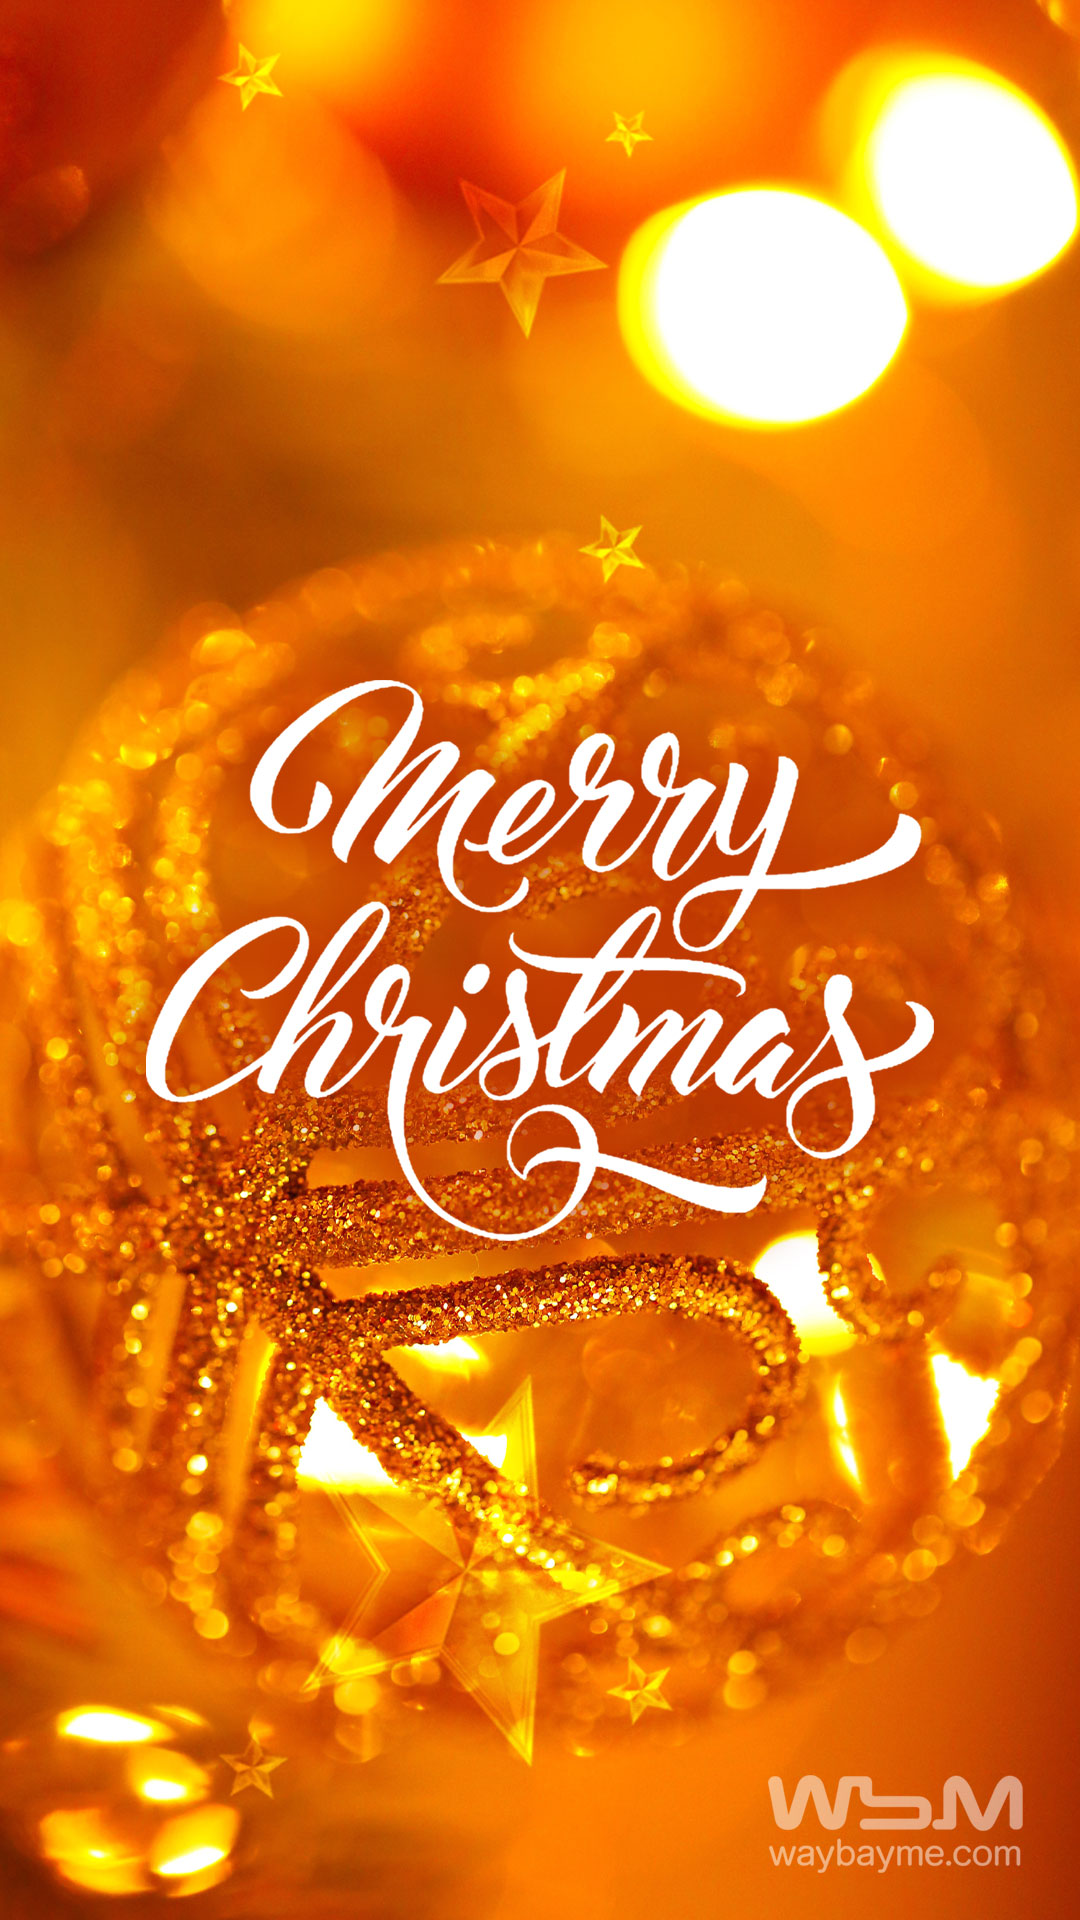 Merry Christmas, Happy Christmas, Christmas Greetings, Christmas Greeting Cards, Christmas Greeting, Christmas Wishes, Happy Xmas, Xmas Greetings, Xmas, Christmas, Christmas Gift, Free Christmas Gifts, Christmas Day, Christmas Special